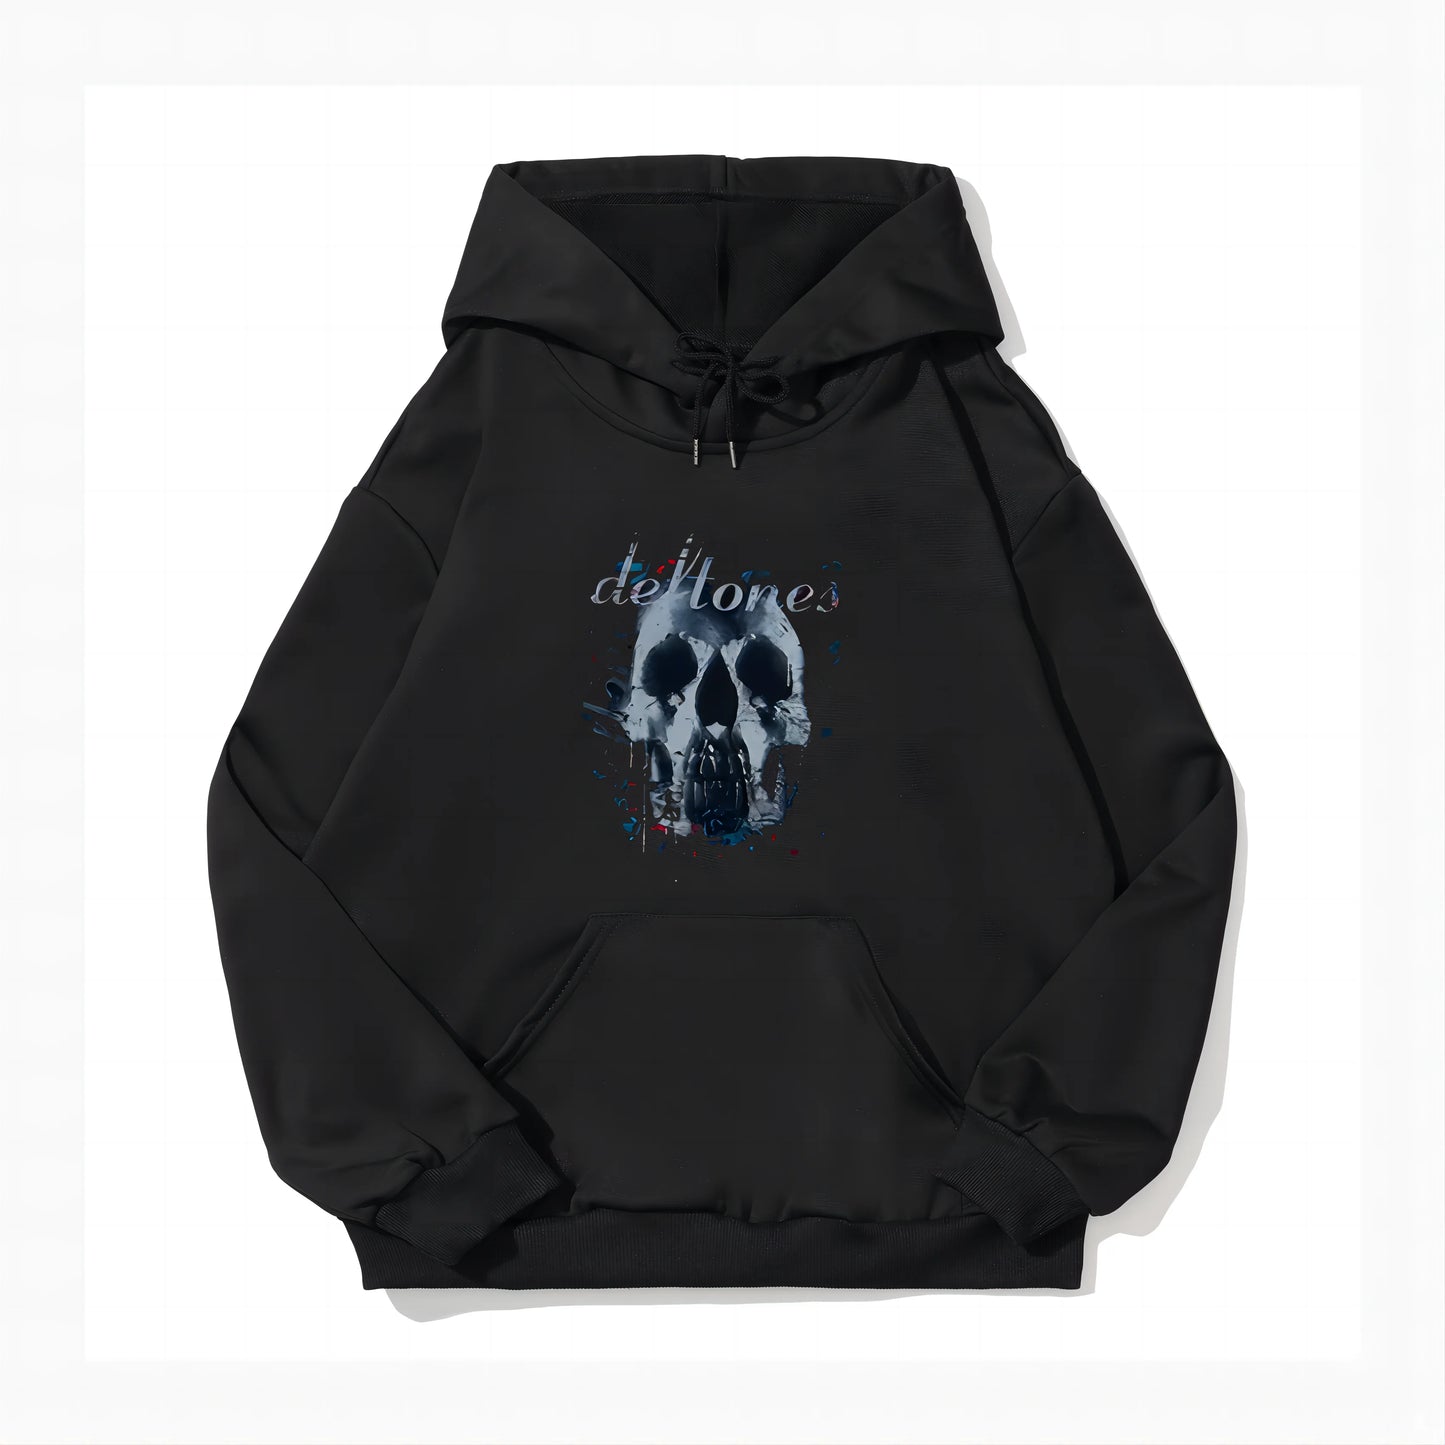 Deftones Skull Black Band Hoodies Hip Hop Fashion Punk Skeleton Sweatshirts Harajuku Gothic Vintage Rock Winter Warm Hooded Tops